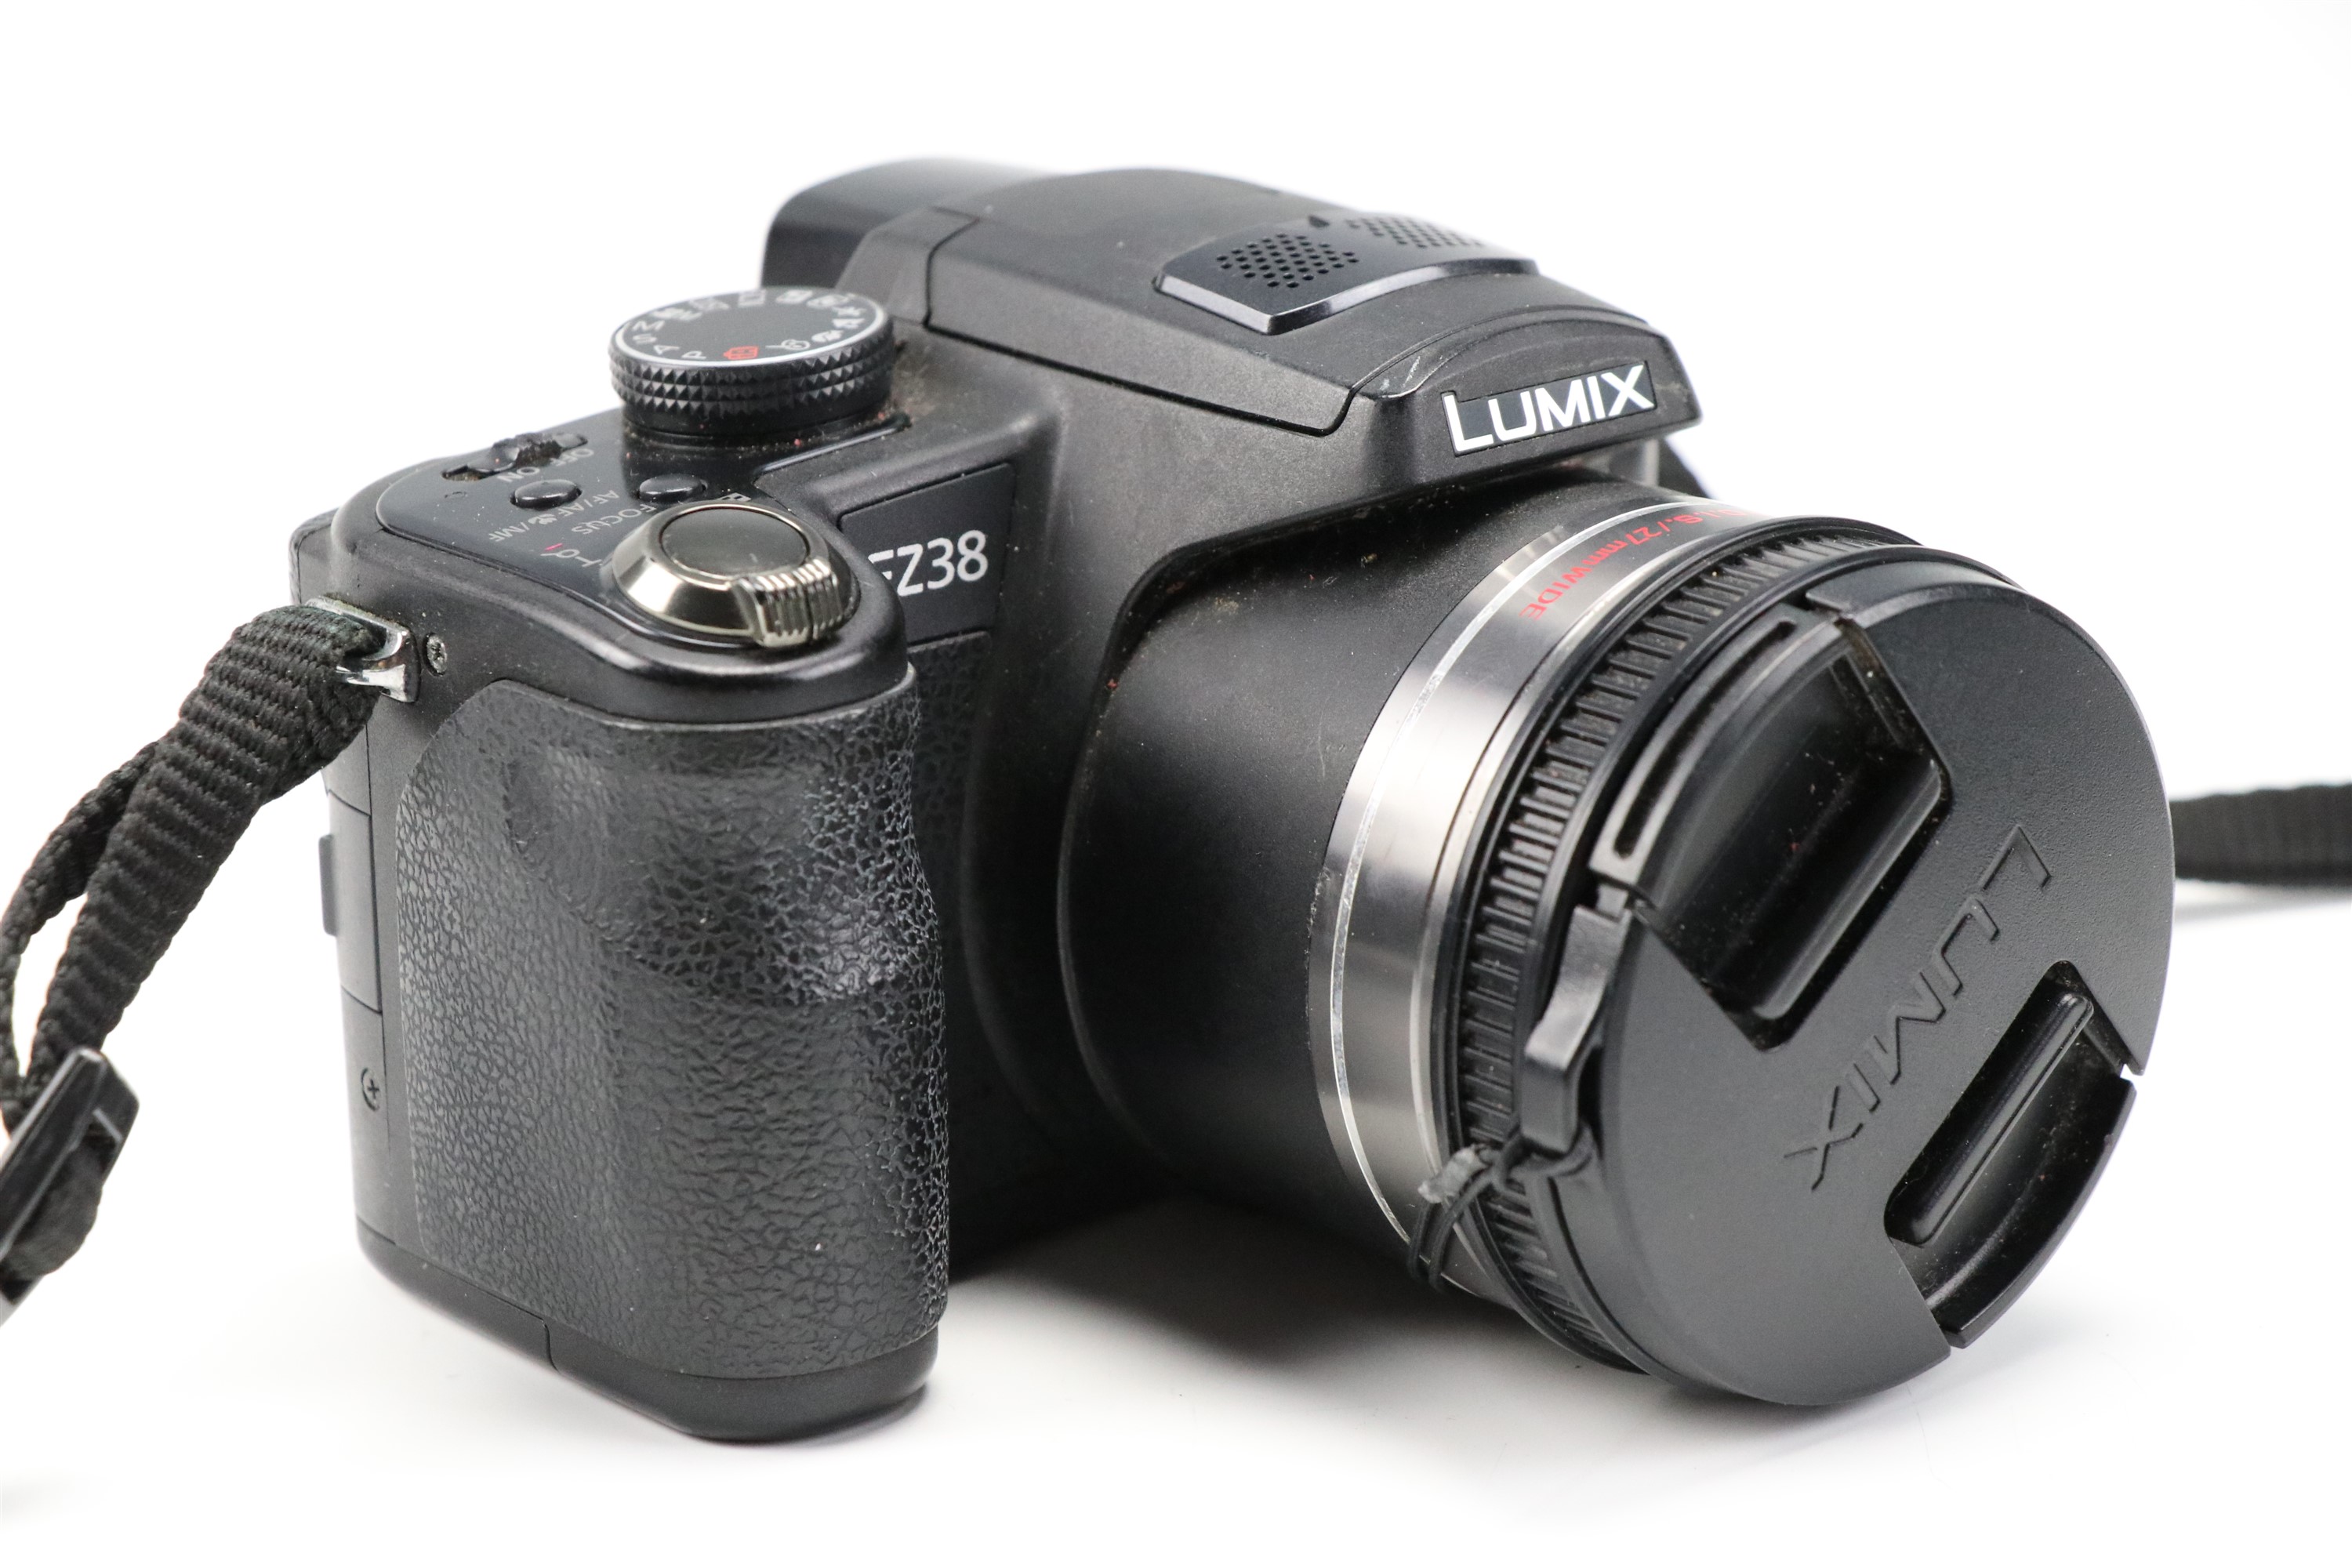 Lumix F238 HD, Canon EOS IX, Canon Digital IXUS 430, Konica Minolta Dimage 25 and Konica C35 EFP - Image 13 of 24